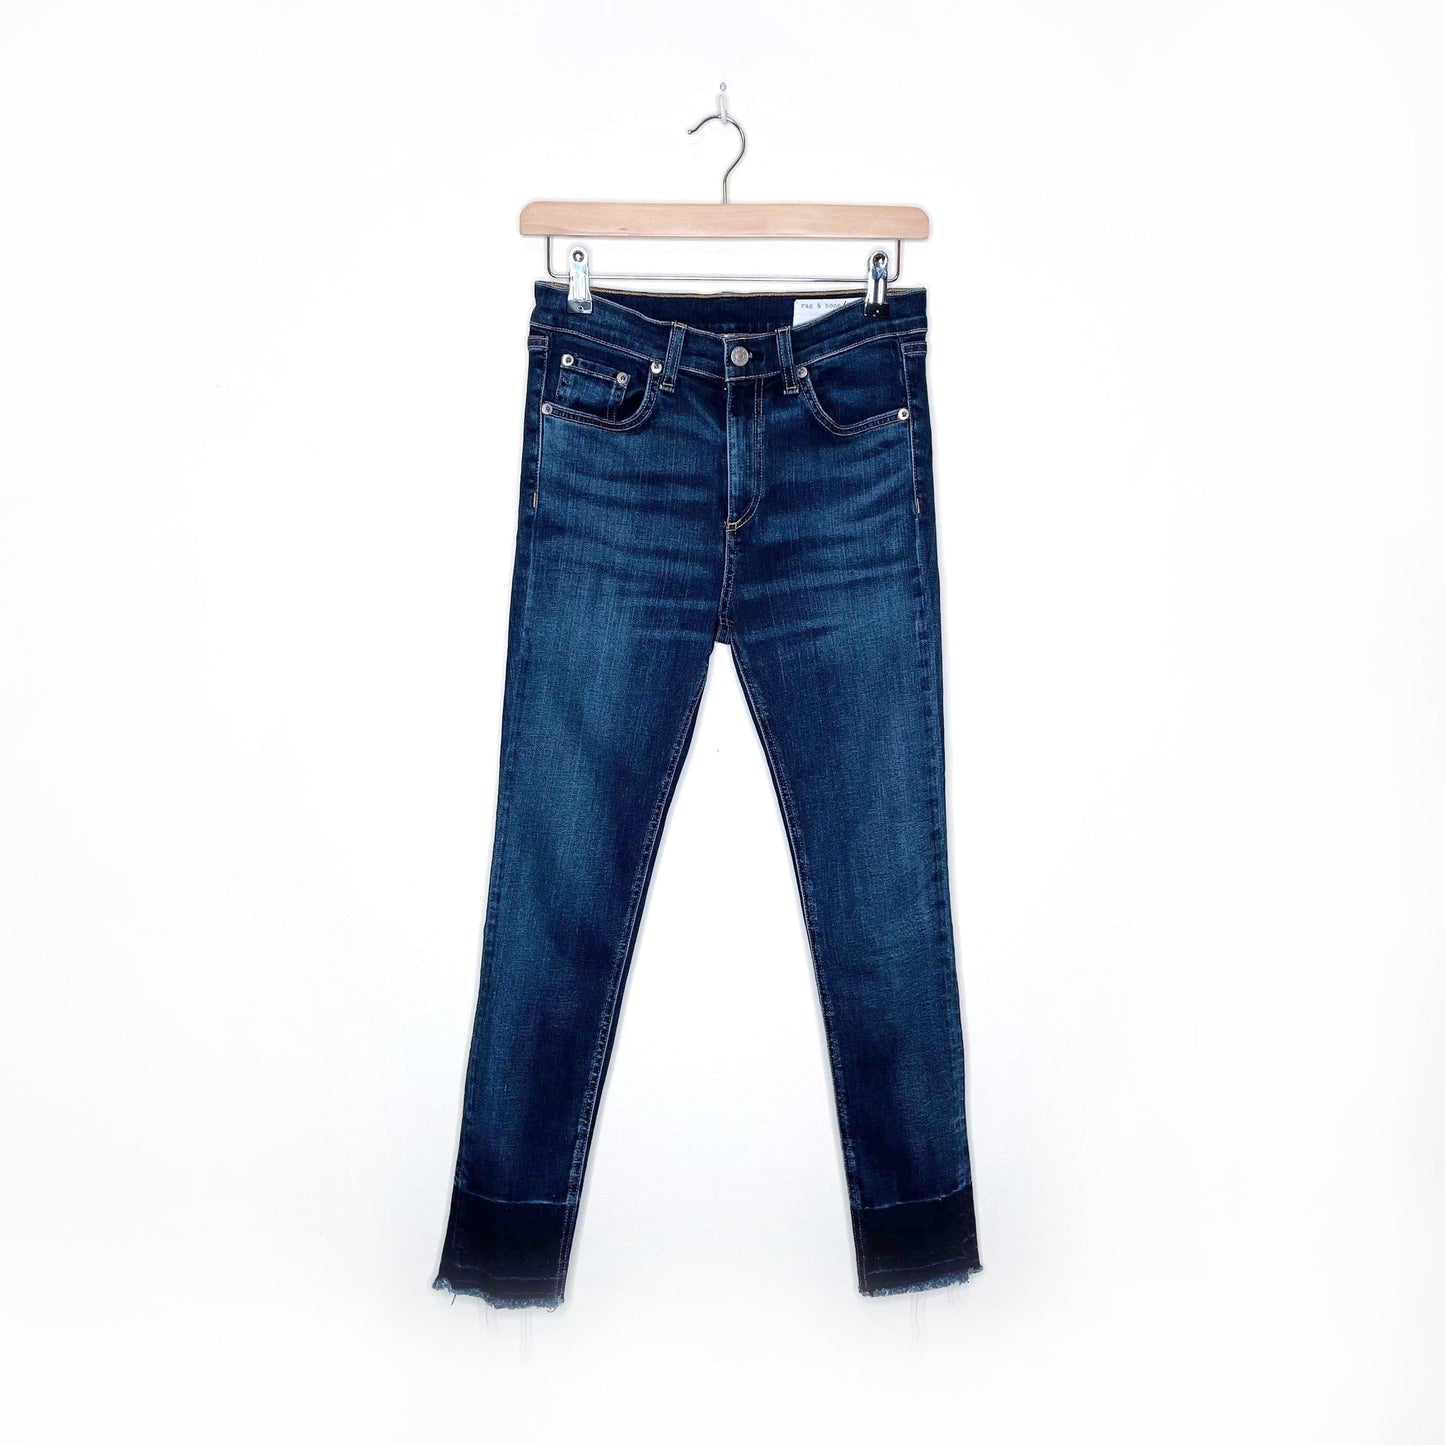 rag & bone 10" capri jeans in stanwix - size 27